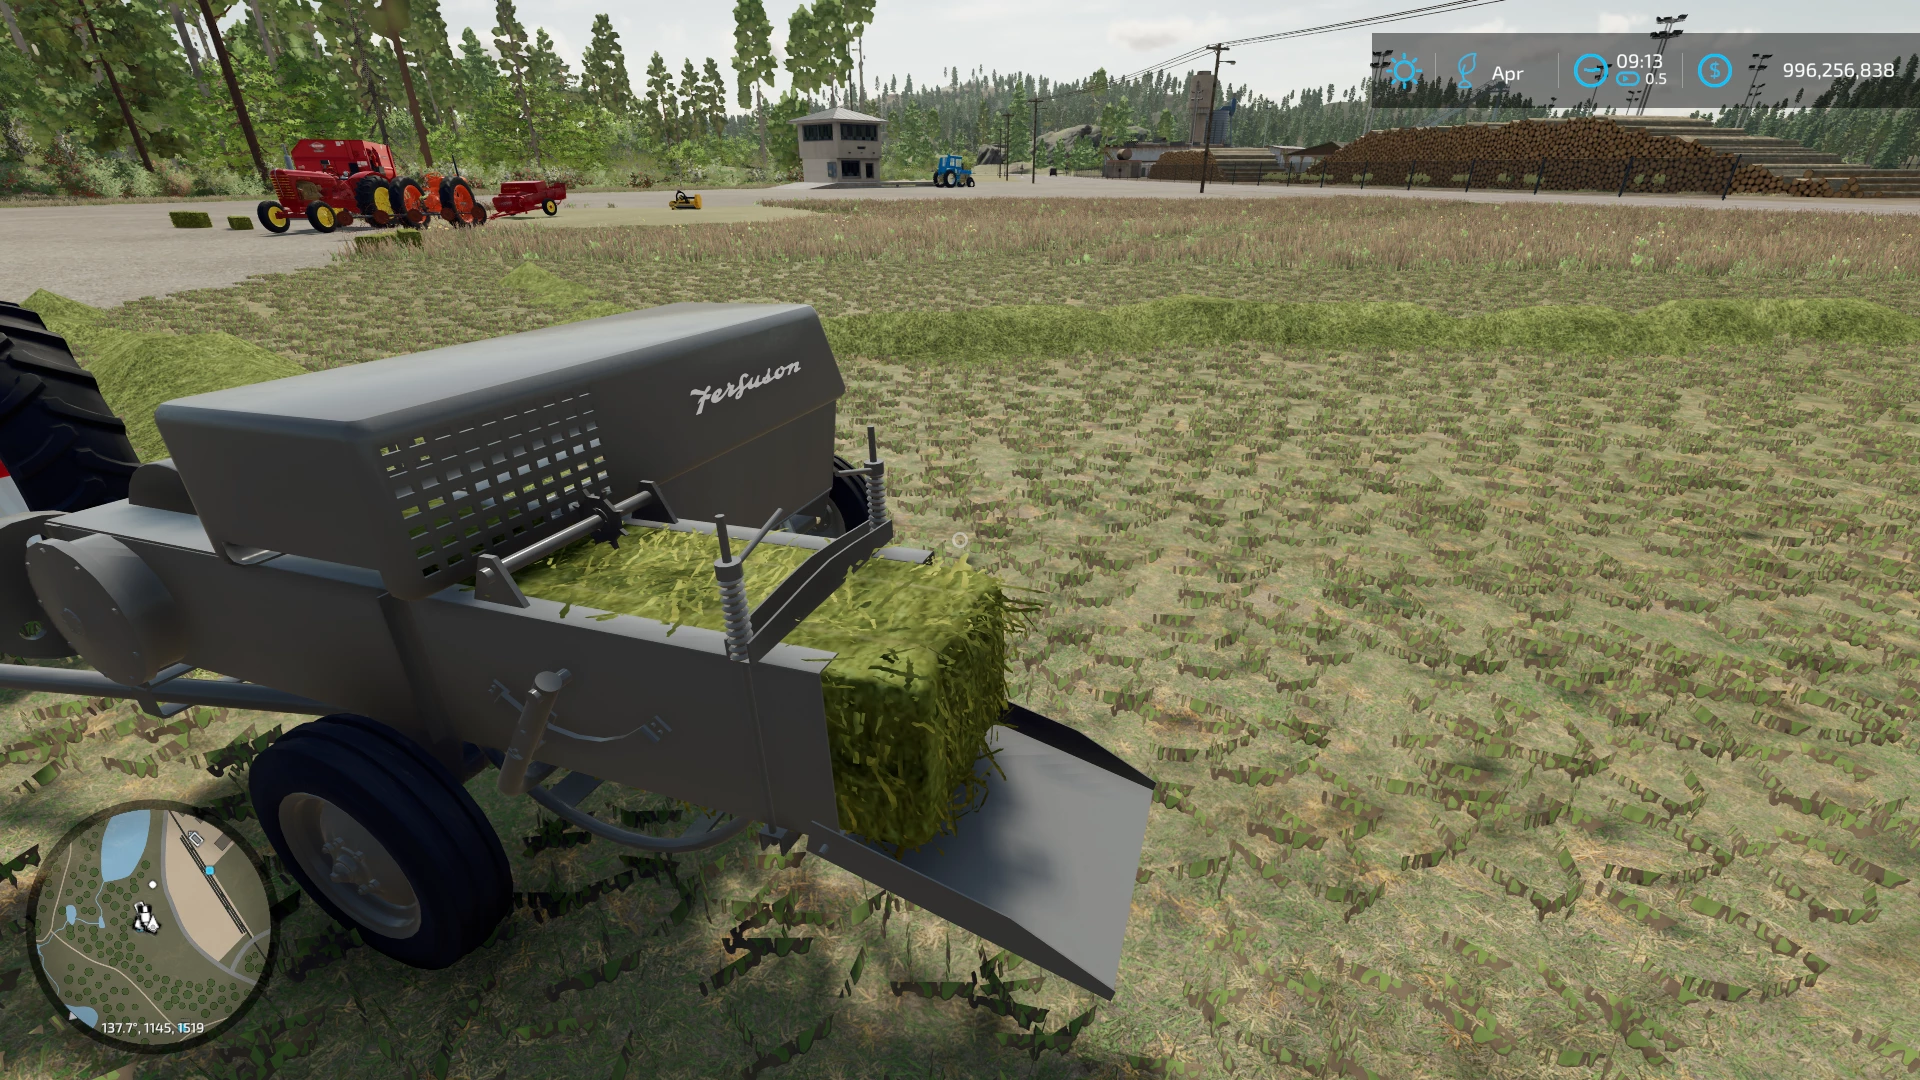 Farming Simulator 20 { Massey Ferguson 65X Tractor } Mod Gameplay